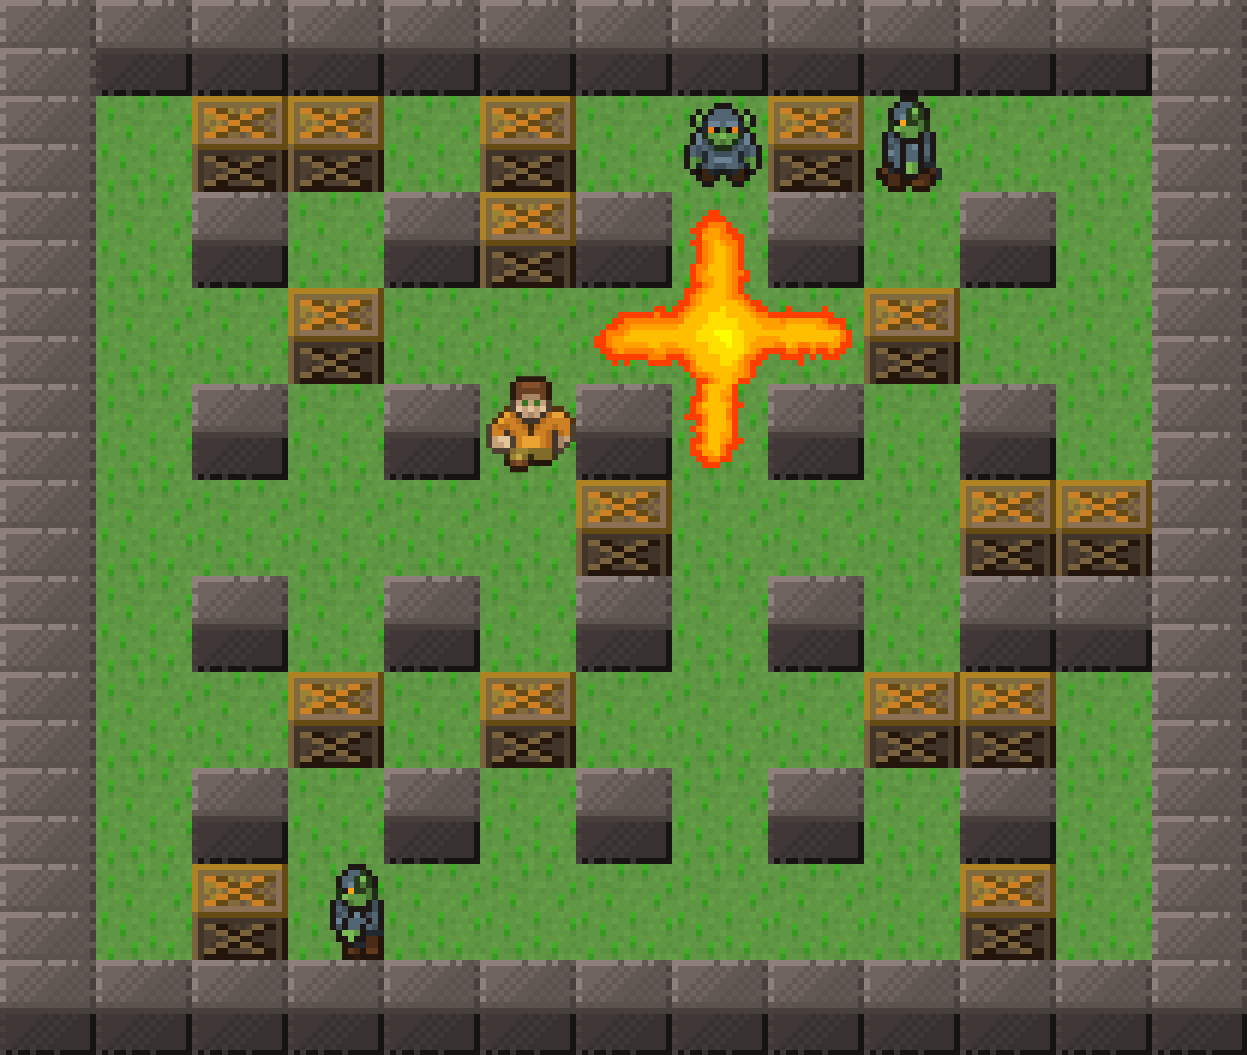 gameplay screenshot wthh an explosion